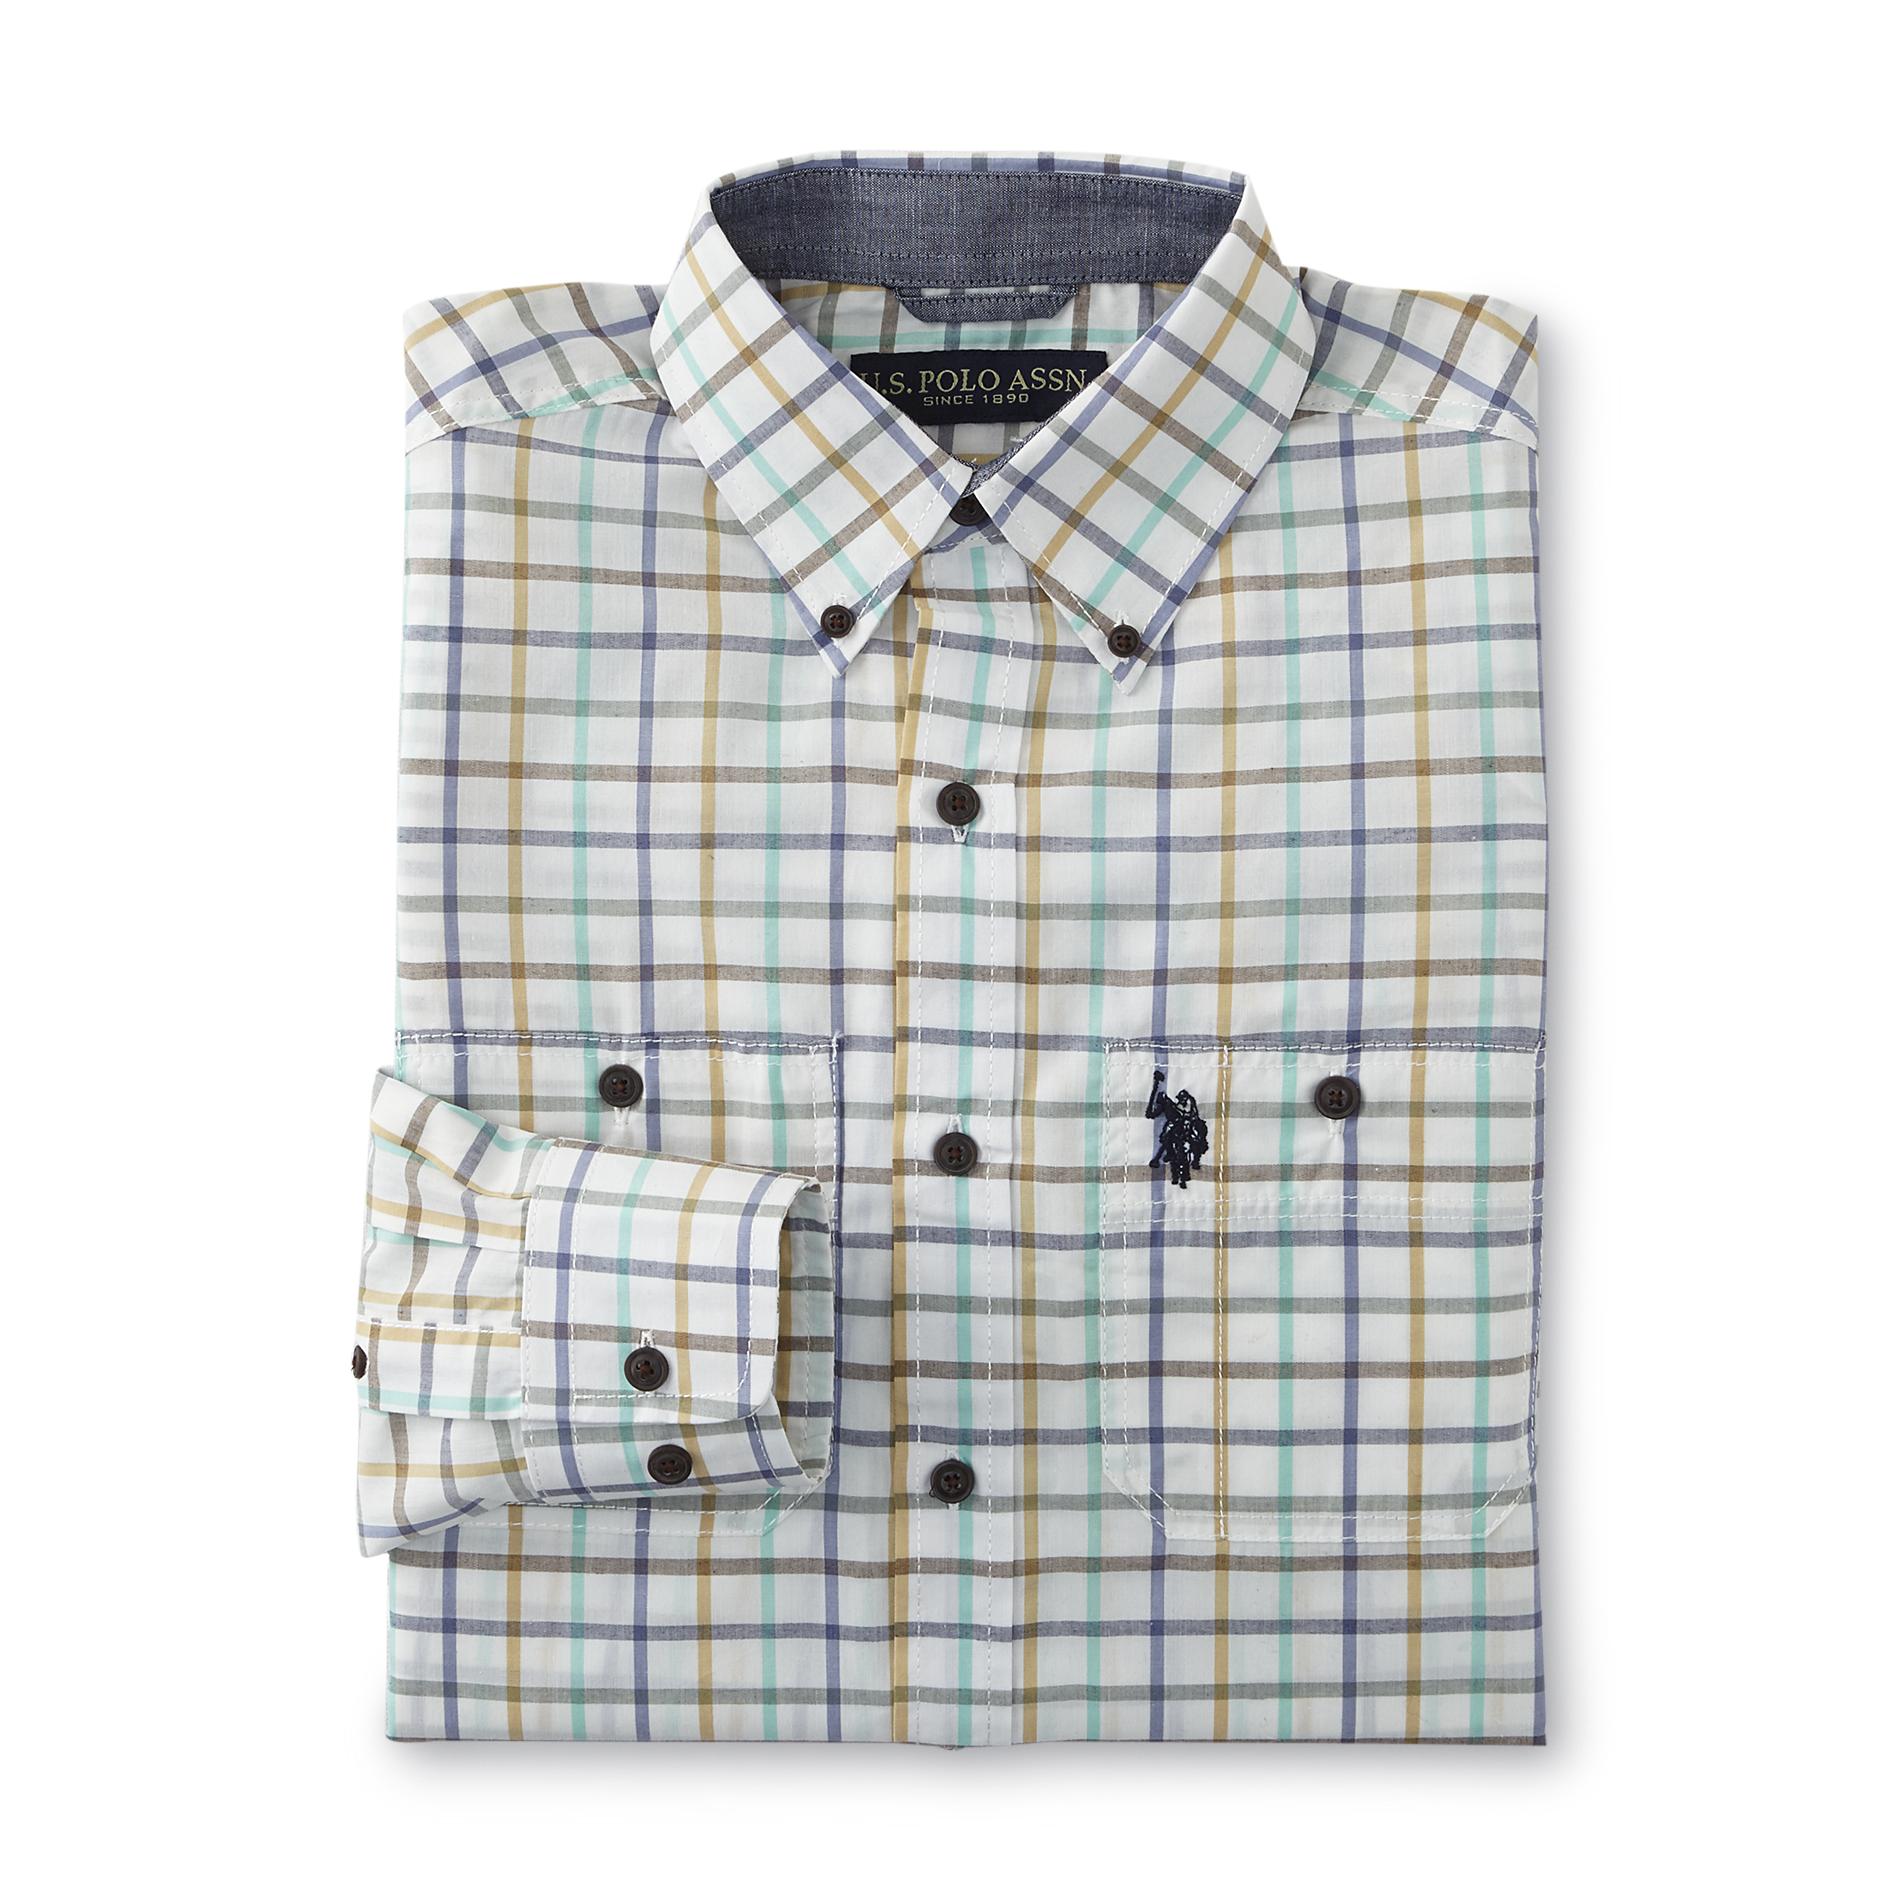 U.S. Polo Assn. Men's Dress Shirt - Check Print